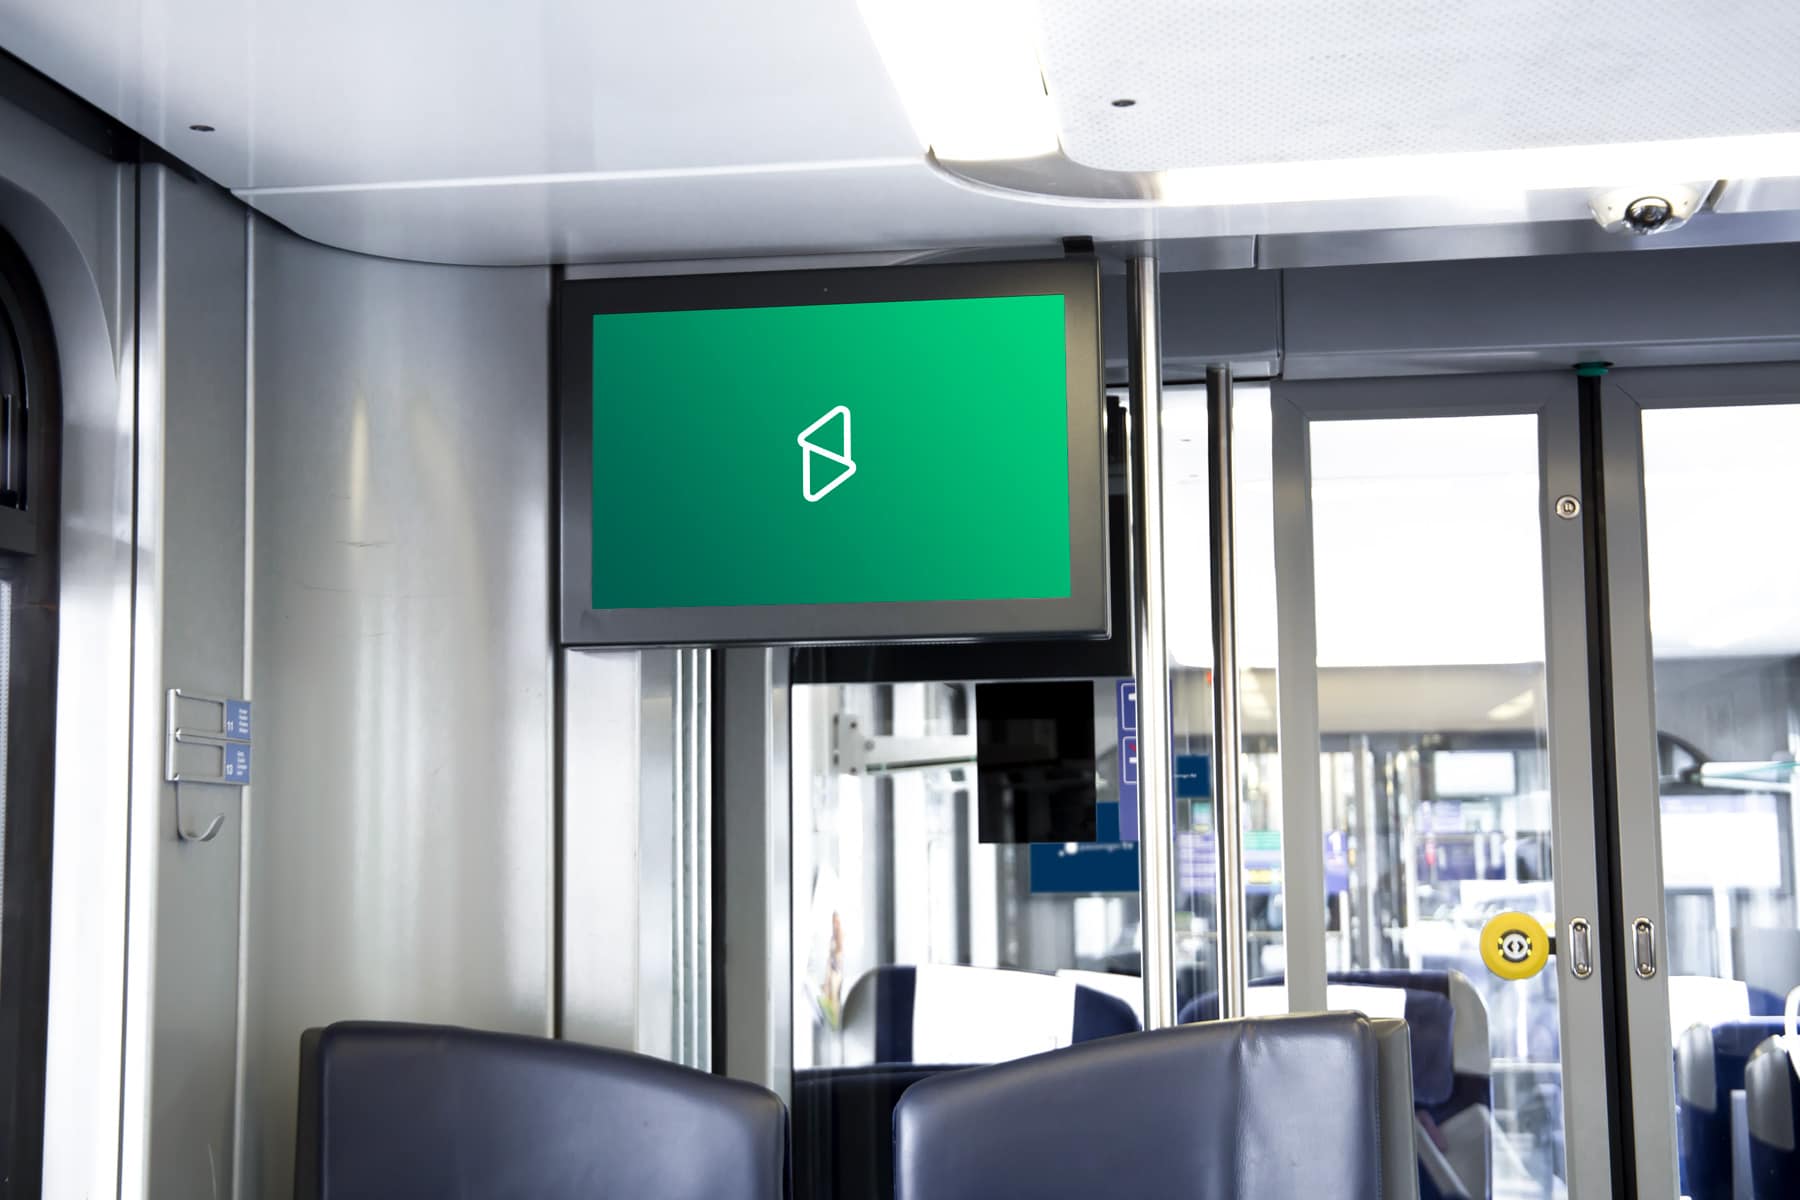 Environment Public Transport - Digitaler Werbescreen in einem Zug